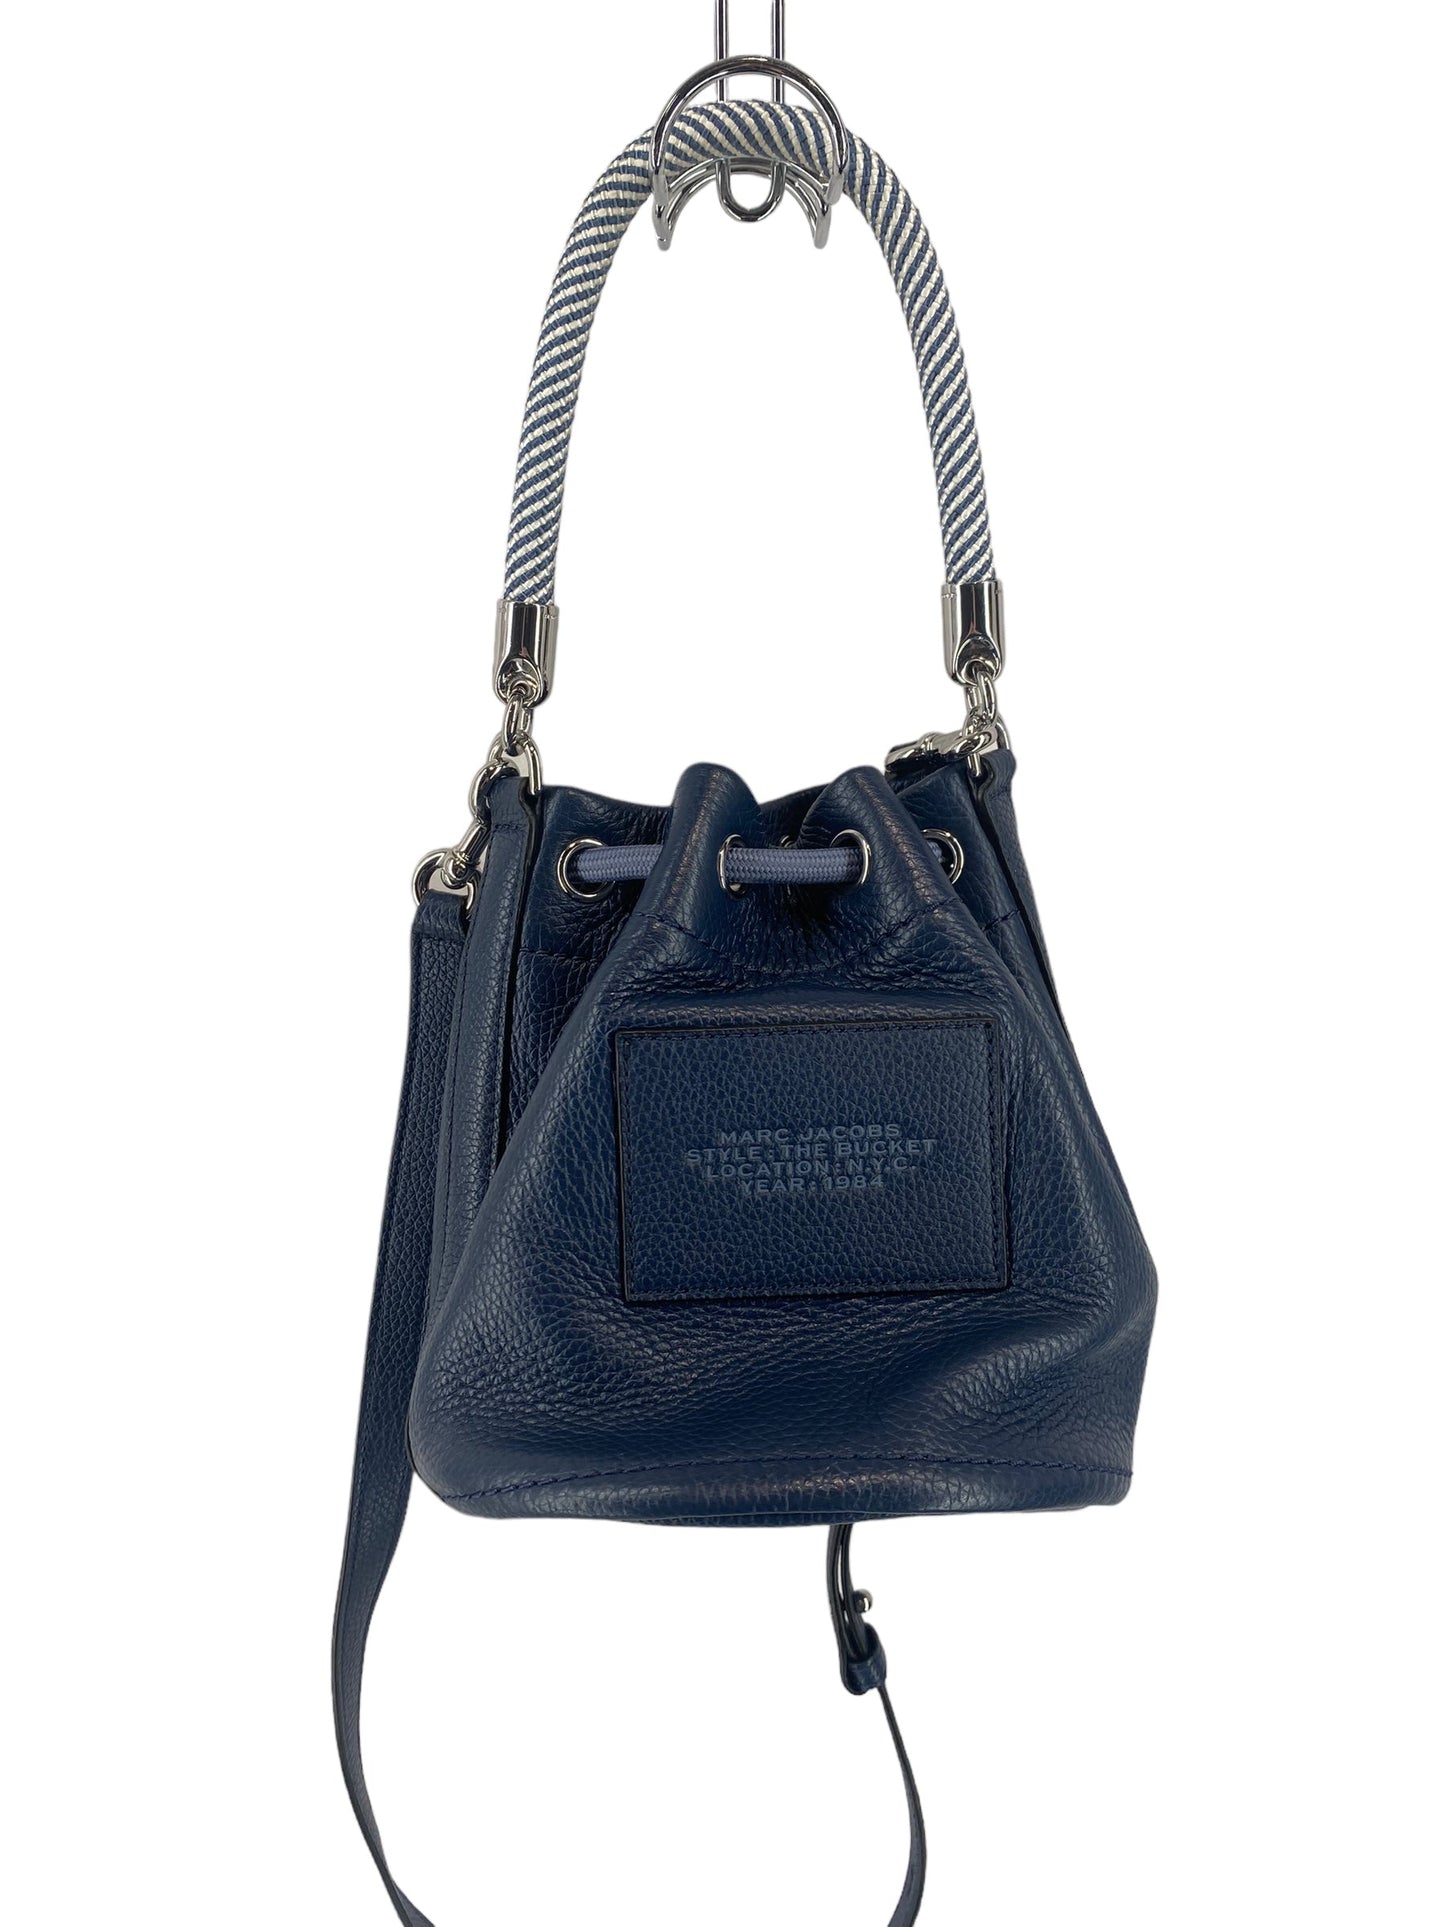 Handbag Designer Marc Jacobs, Size Small